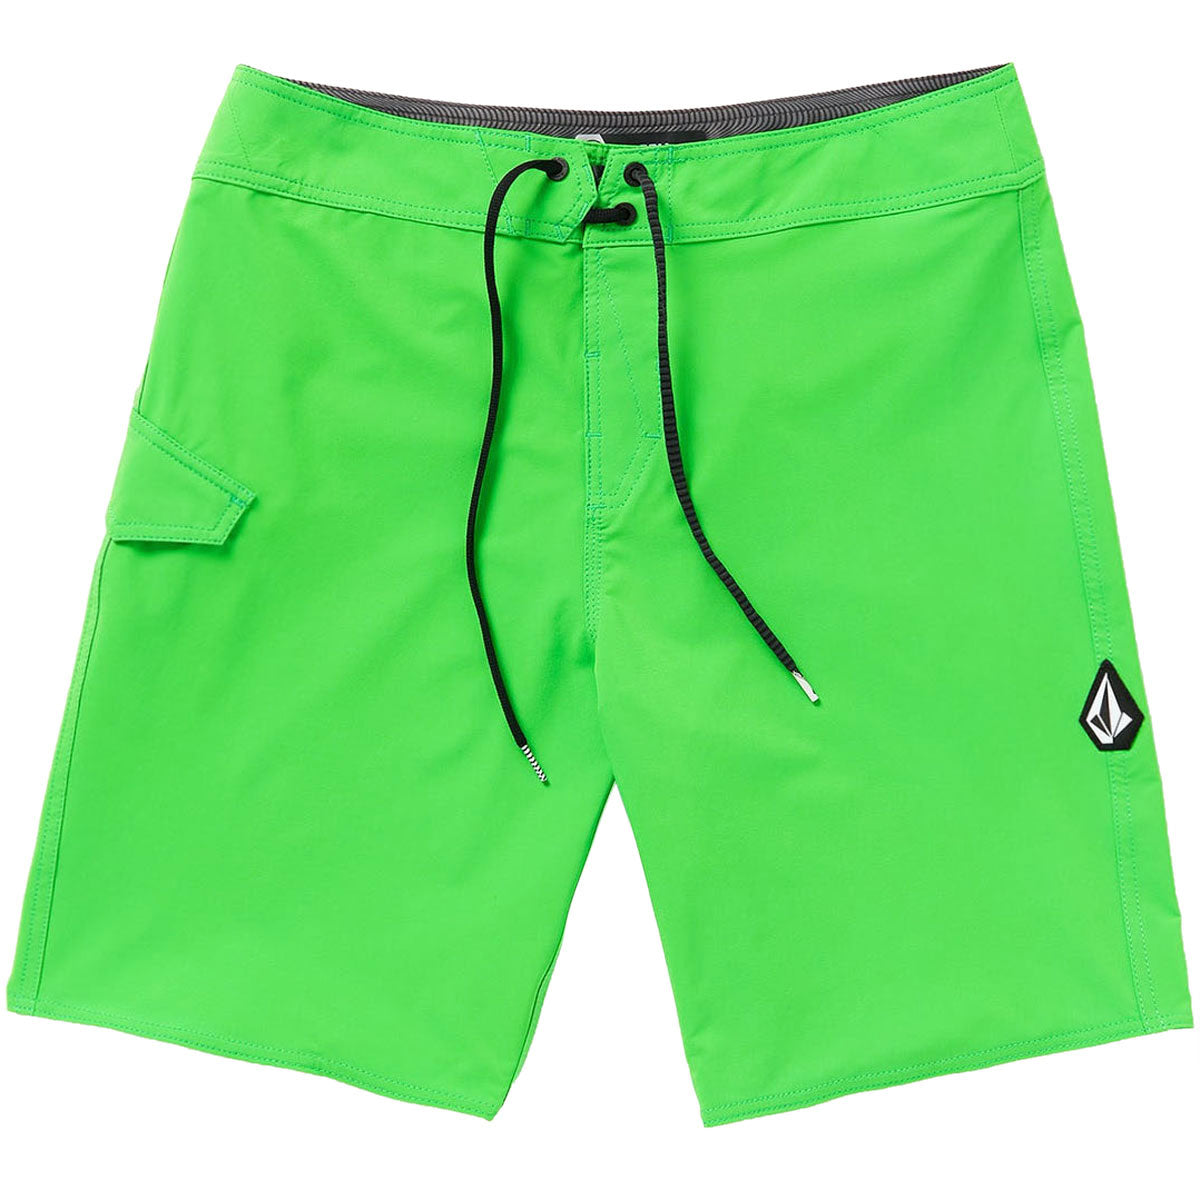 Volcom Lido Solid Mod 20 Board Shorts - Spring Green image 1